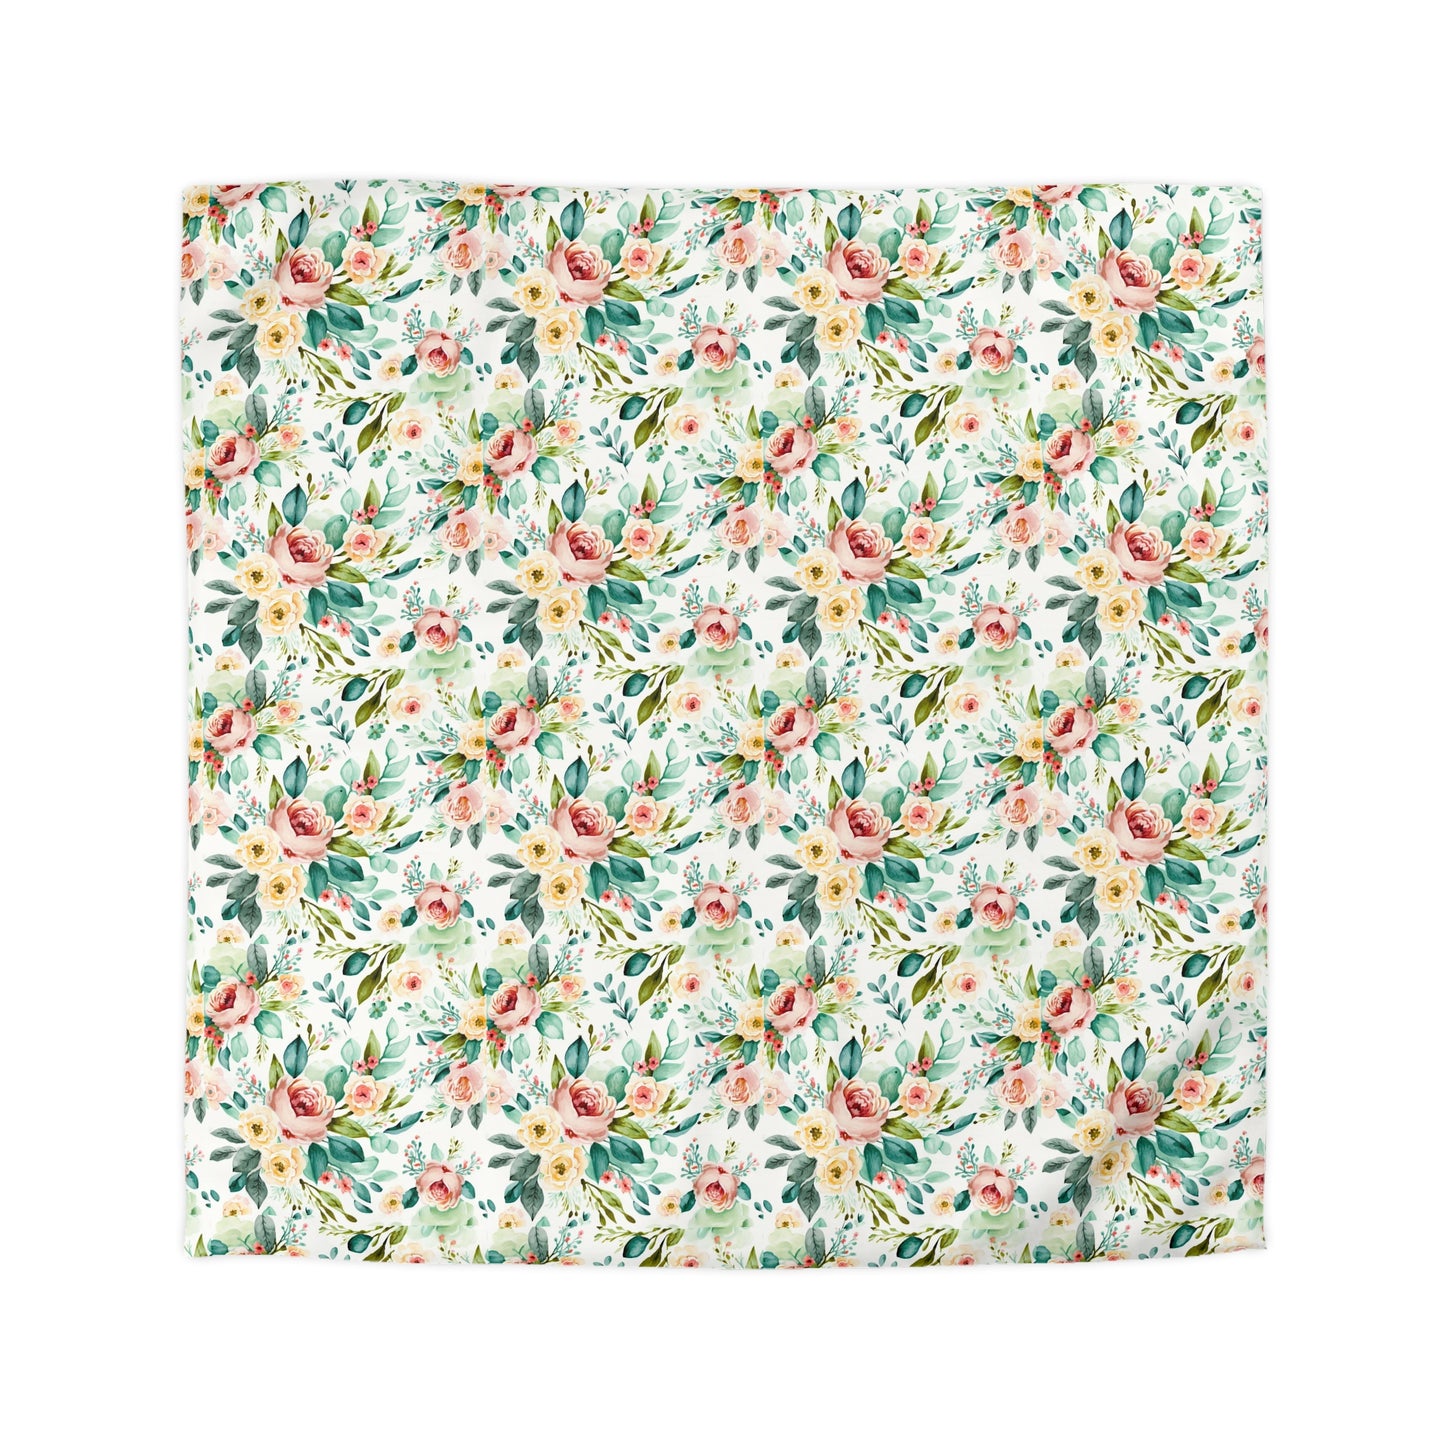 Floral Microfiber Duvet Cover